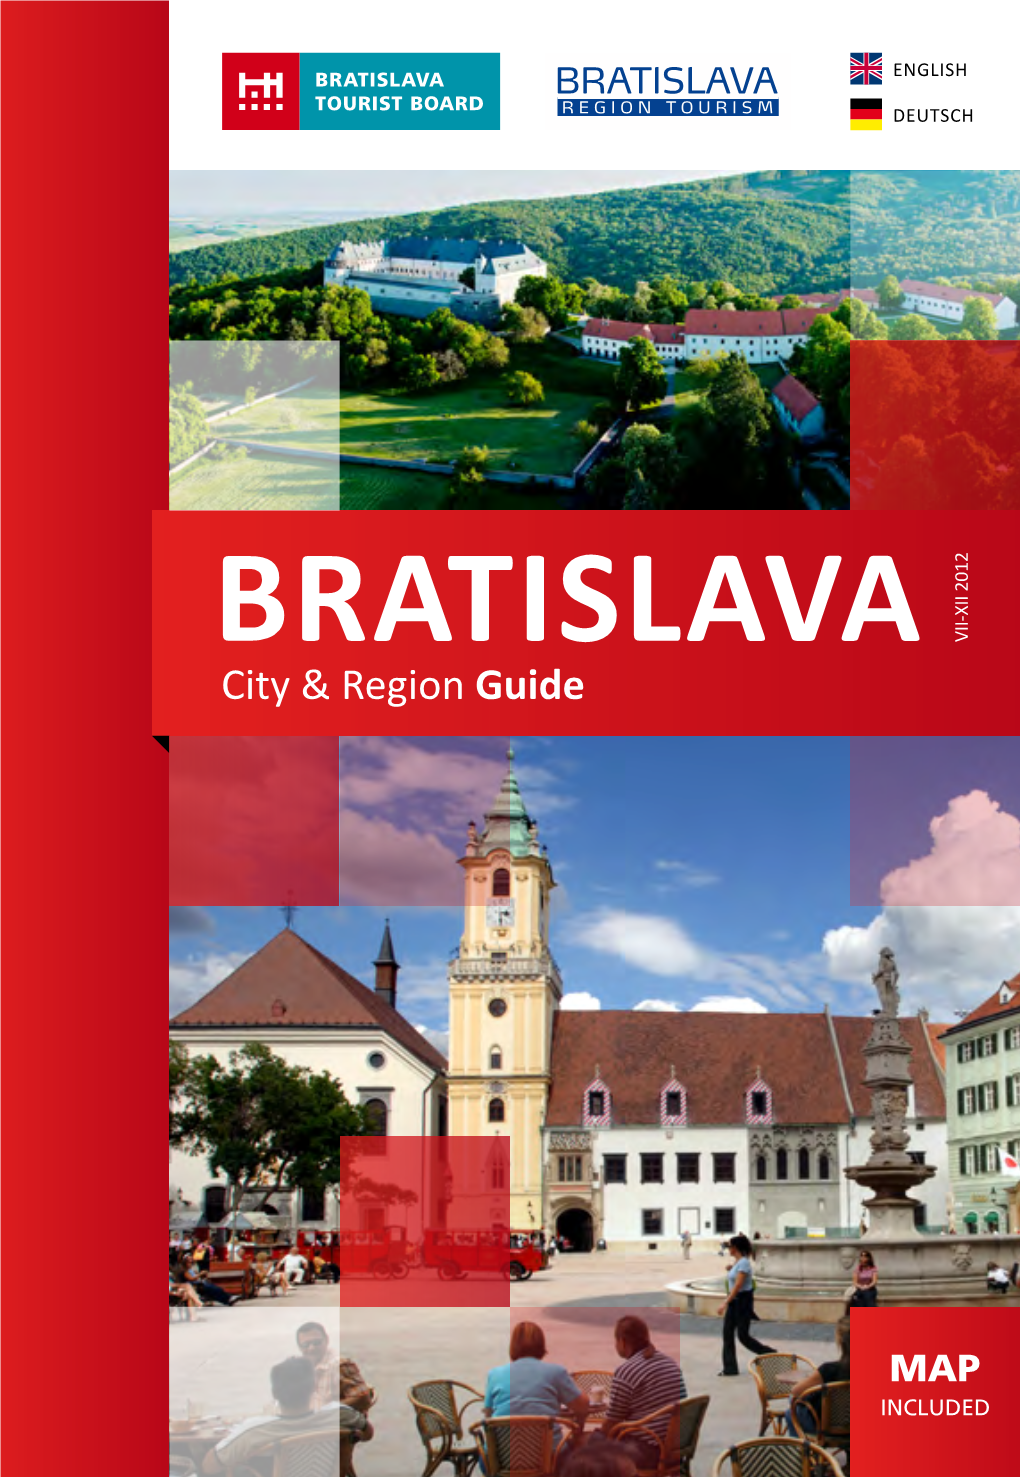 Bratislava Vii-XII 2012 City & Region Guide Contents Inhaltsverzeichnis 03 a Professional VENUE Welcome to Bratislava for MOTOR SPORTS Willkommen in Bratislava